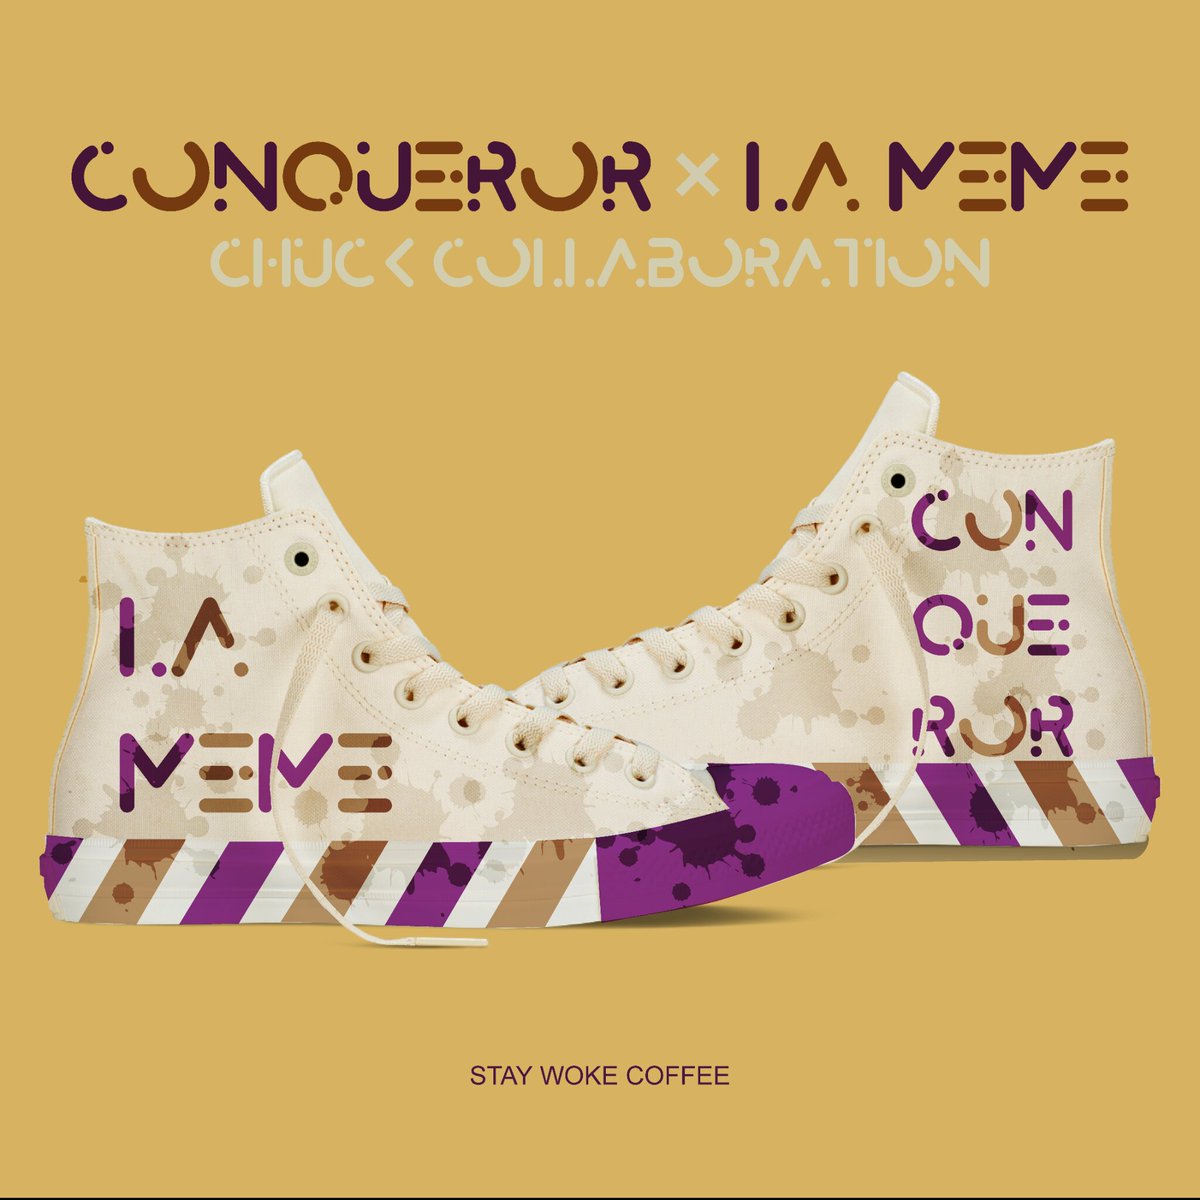 CONQUEROR and LA MEME chuck Taylor customization 
#GraphicDesign #GraphicDesigner @LaMemeGang
#LaMemeGang @Nxwrth @darkovibes @KwakuBs @Yun07690285 @Spacely1z @kiddblackrapgod #chucktaylor #converse #ConverseAllStars